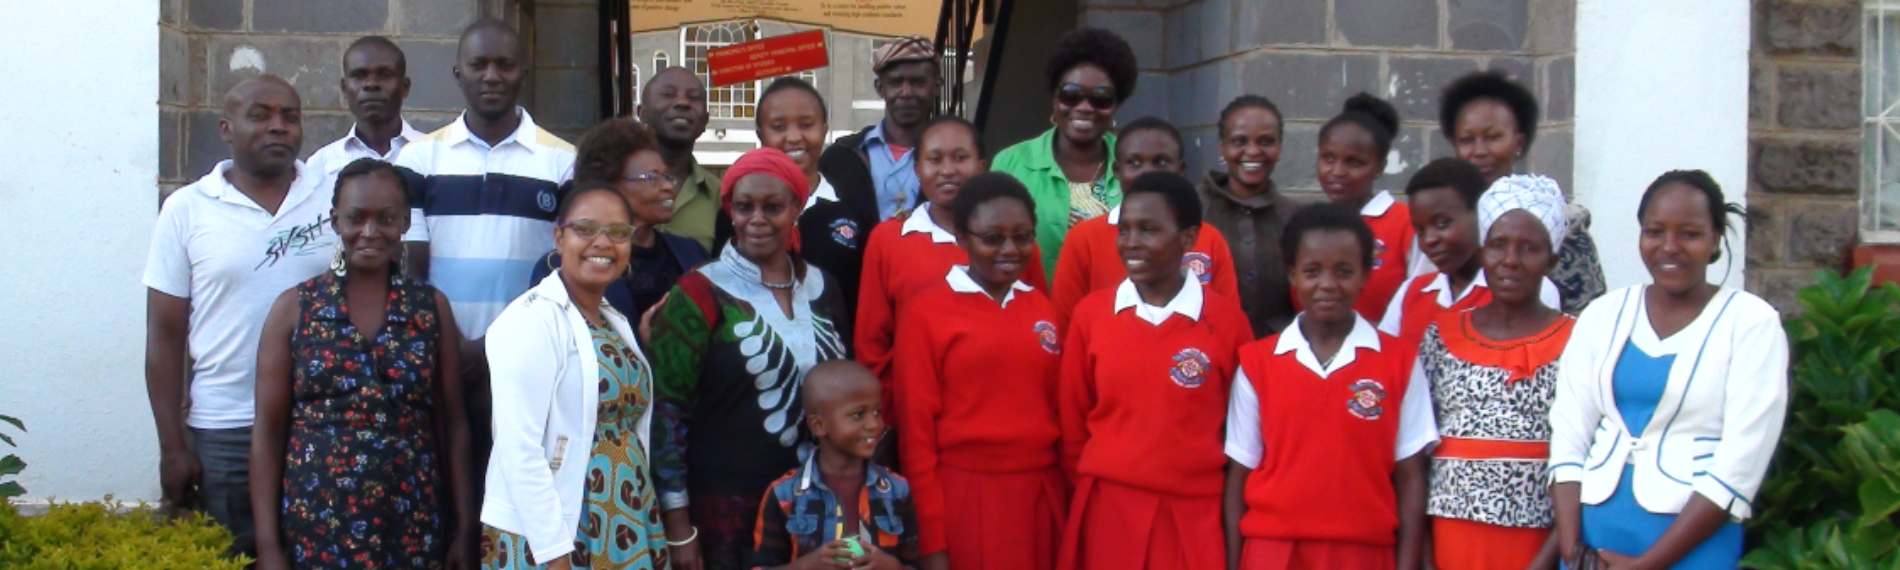 Grup d'estudiants kenyans a l'aula